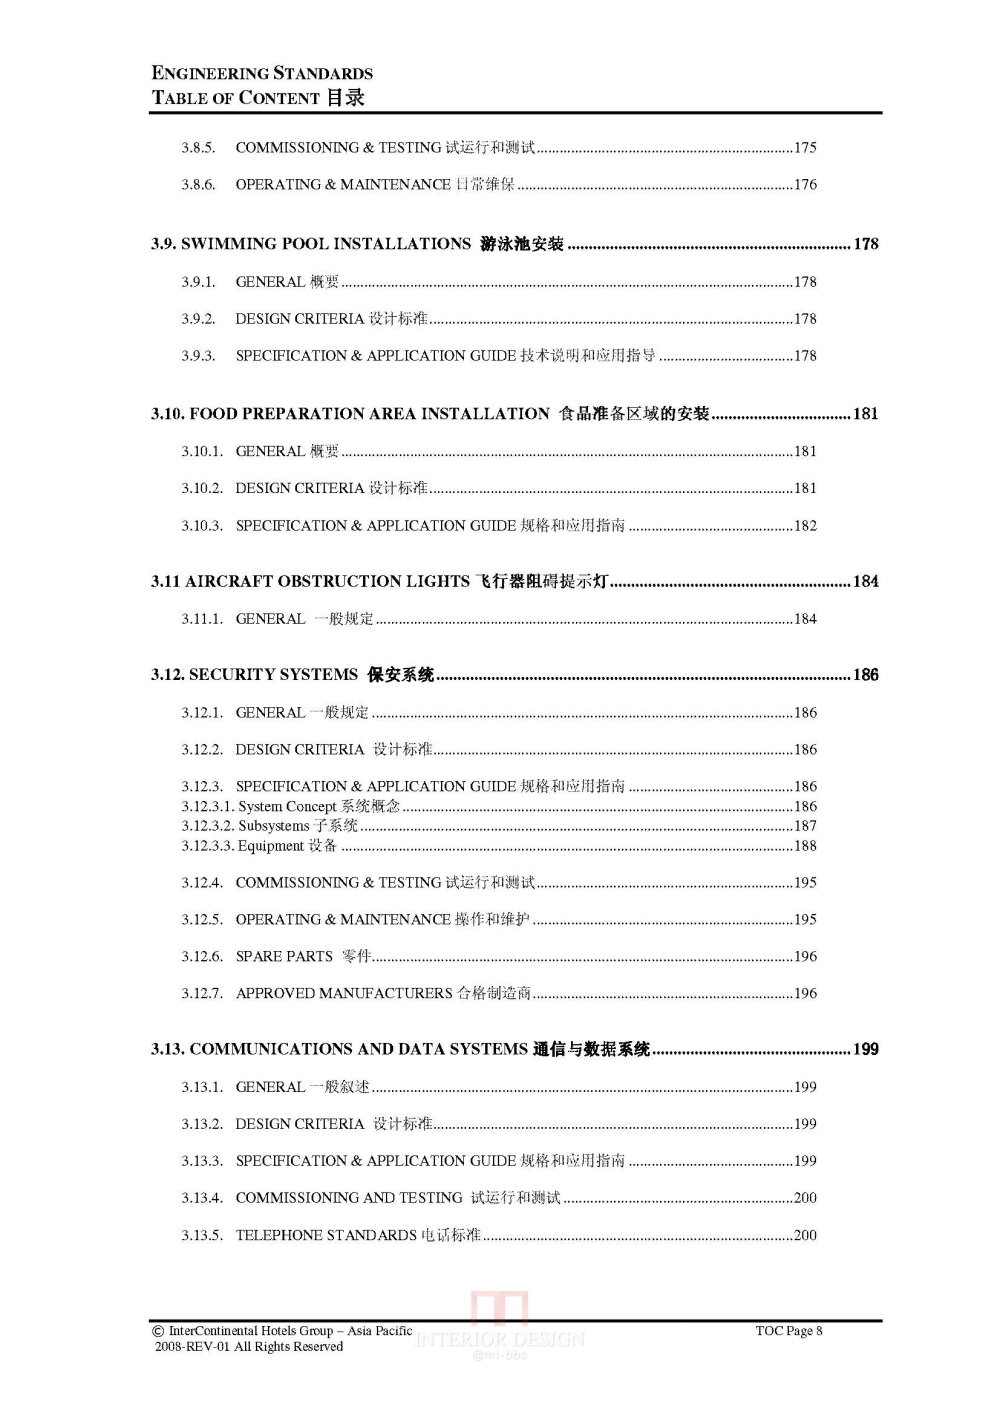 IHG-洲际酒店机电工程设计技术标准(亚太区)_IHG-Engineering Standard 2008_Page_008.jpg